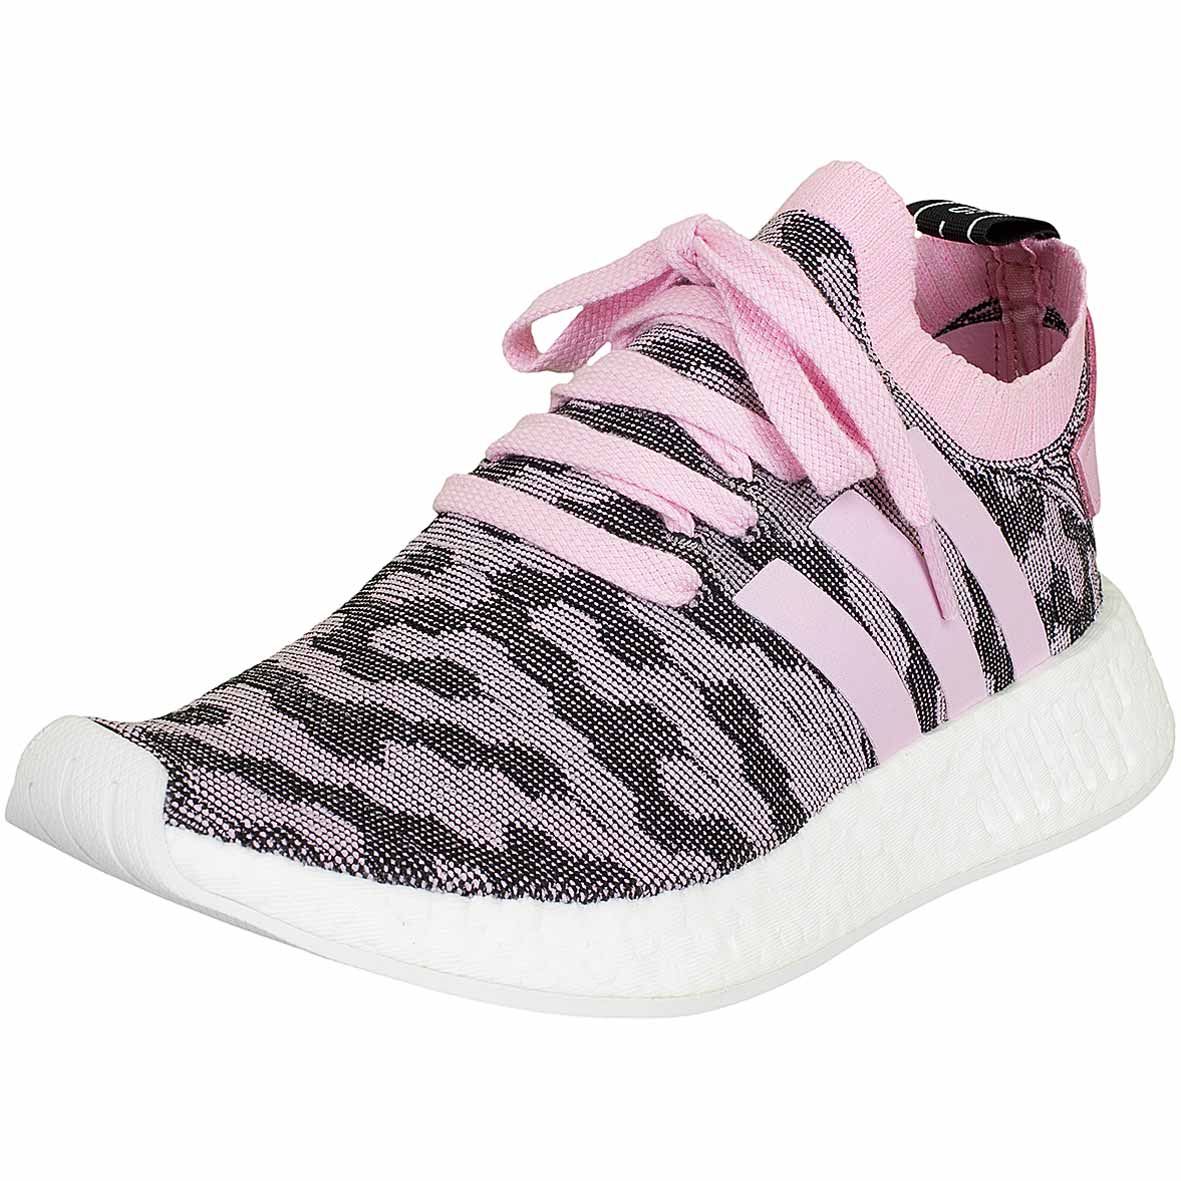 ☆ Adidas Originals Damen Sneaker NMD R2 Primeknit pink/schwarz - hier  bestellen!